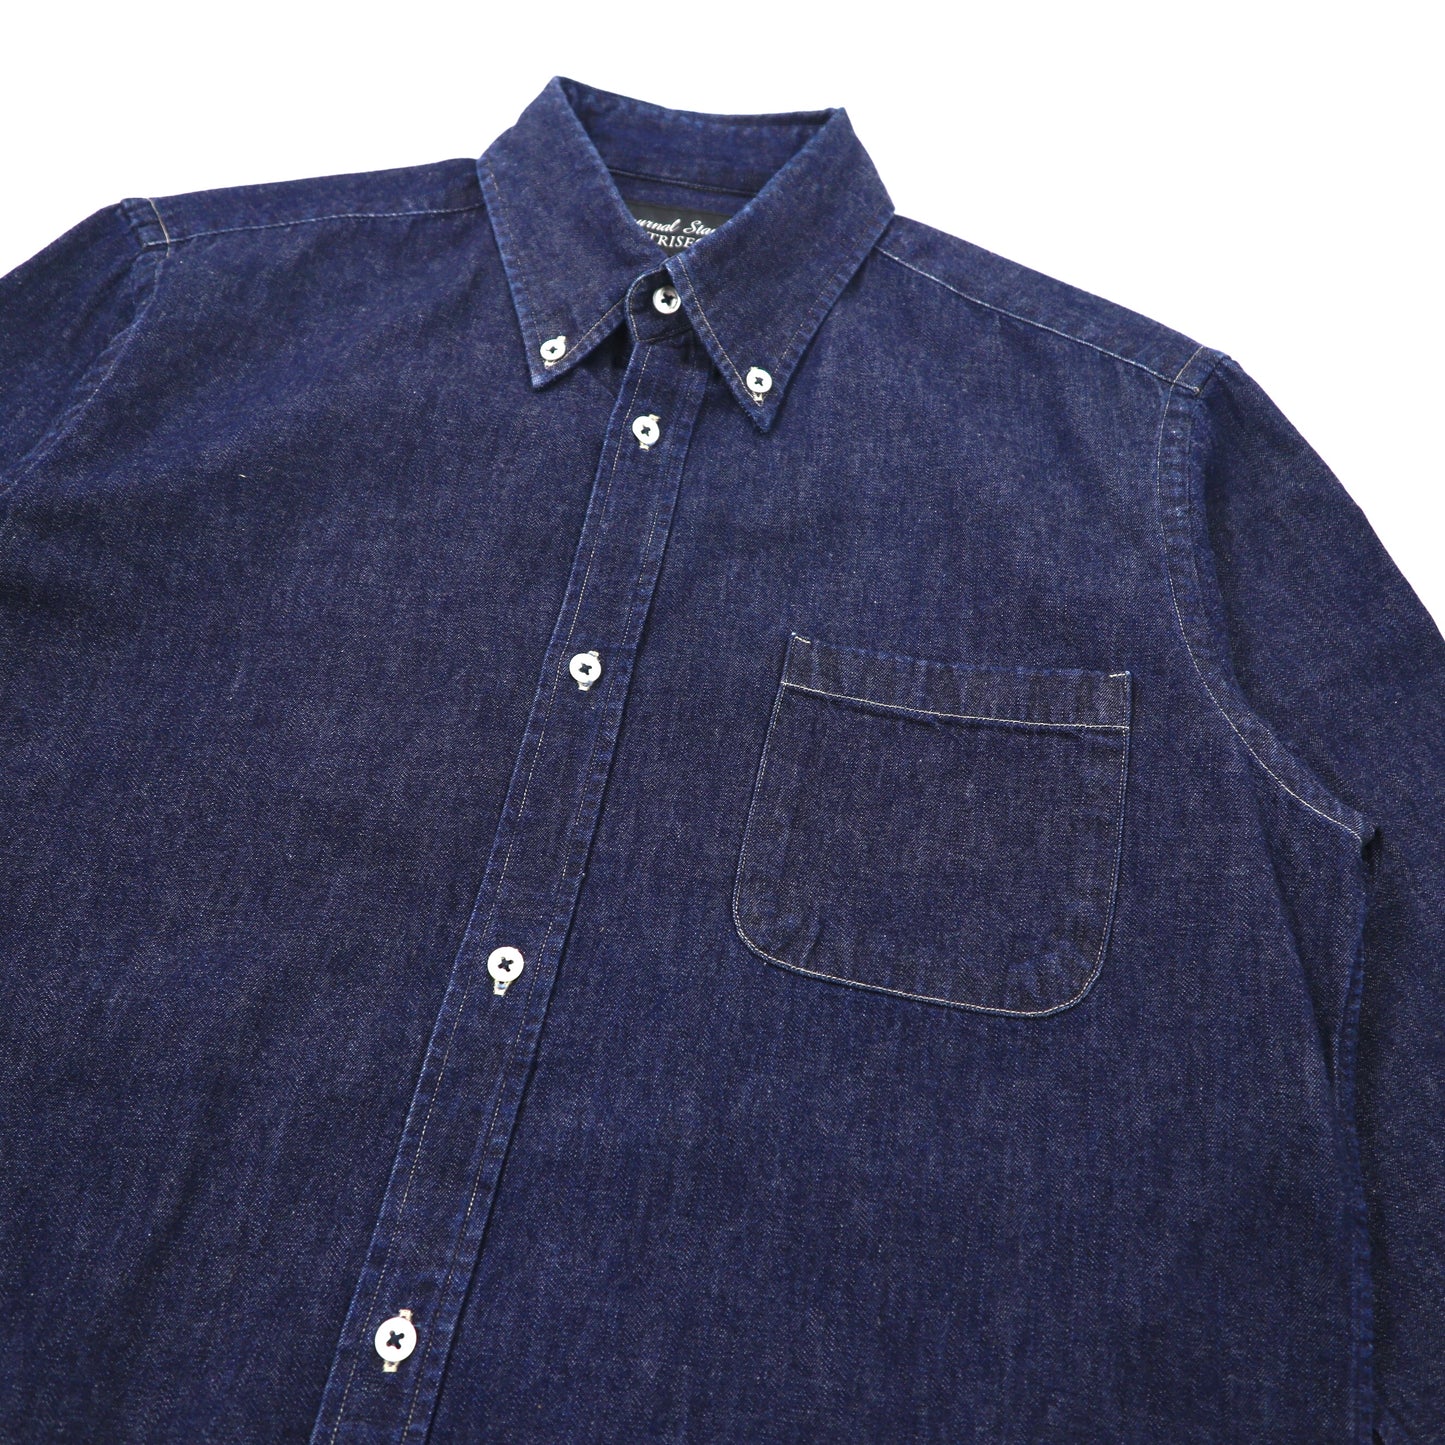 JOURNAL STANDARD TRISECT ボタンダウンシャツ M ブルー デニム 日本製